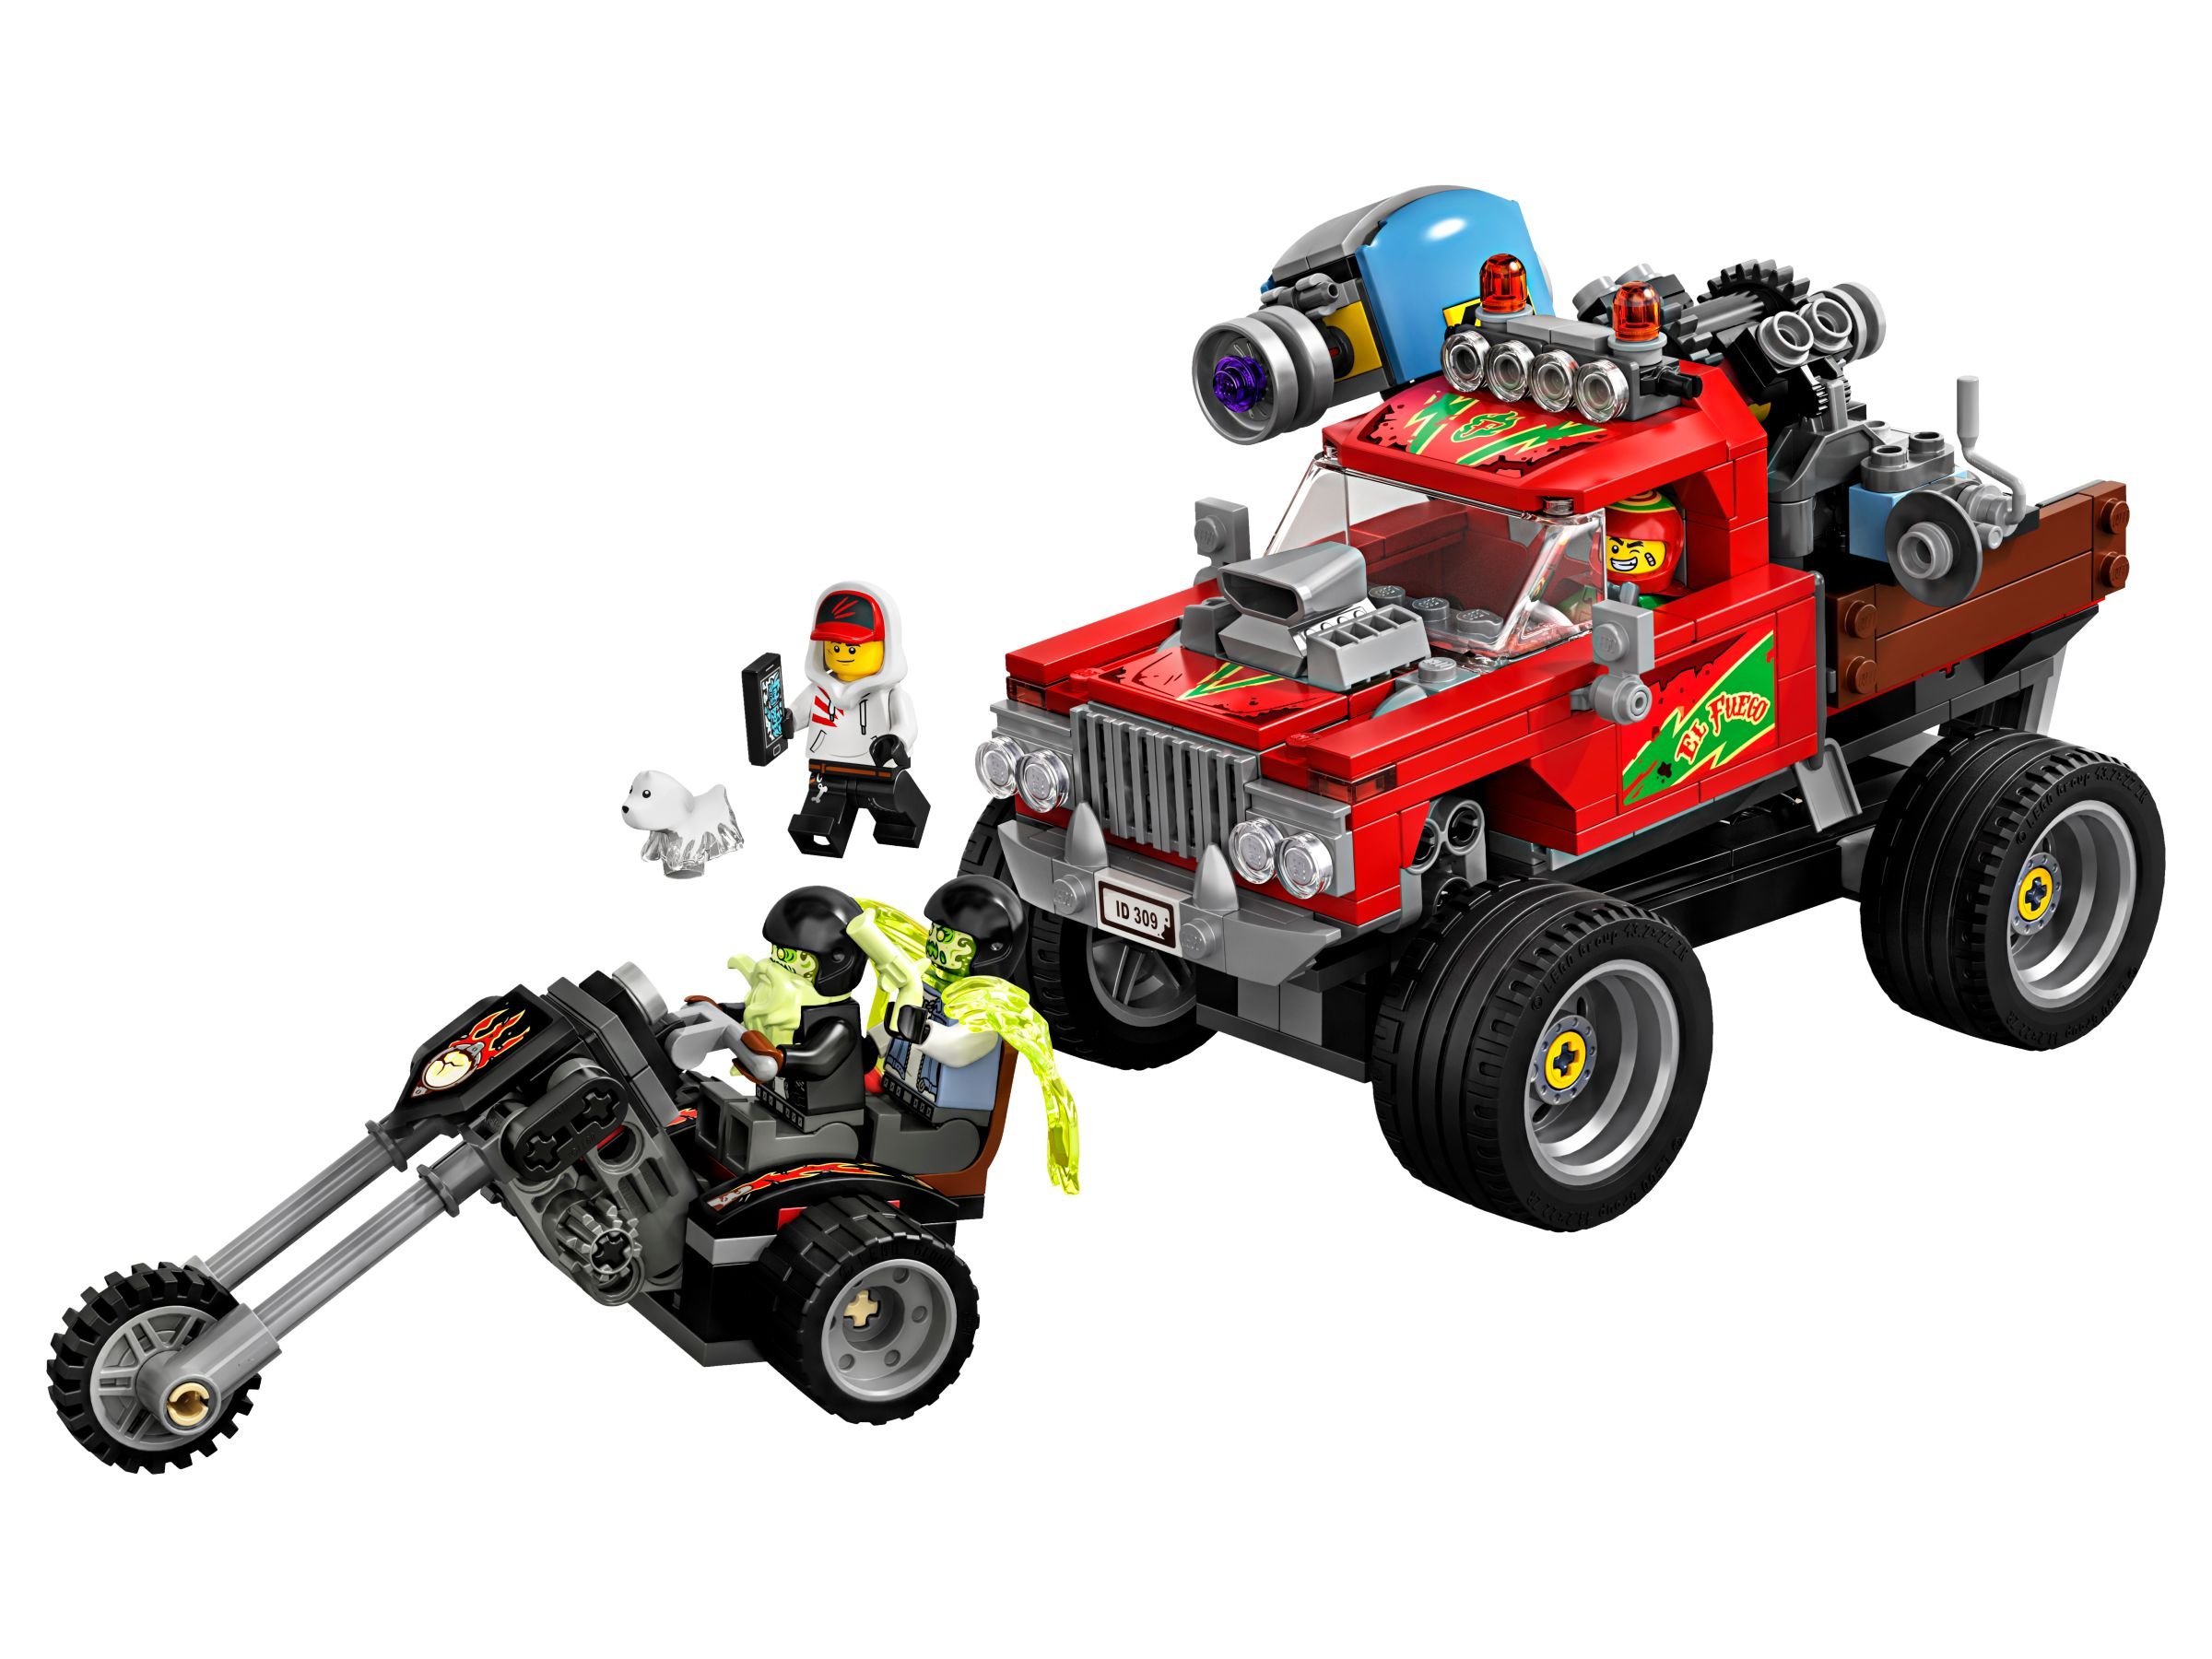 LEGO Hidden Side 70421 El Fuegos Stunt-Truck LEGO_70421.jpg